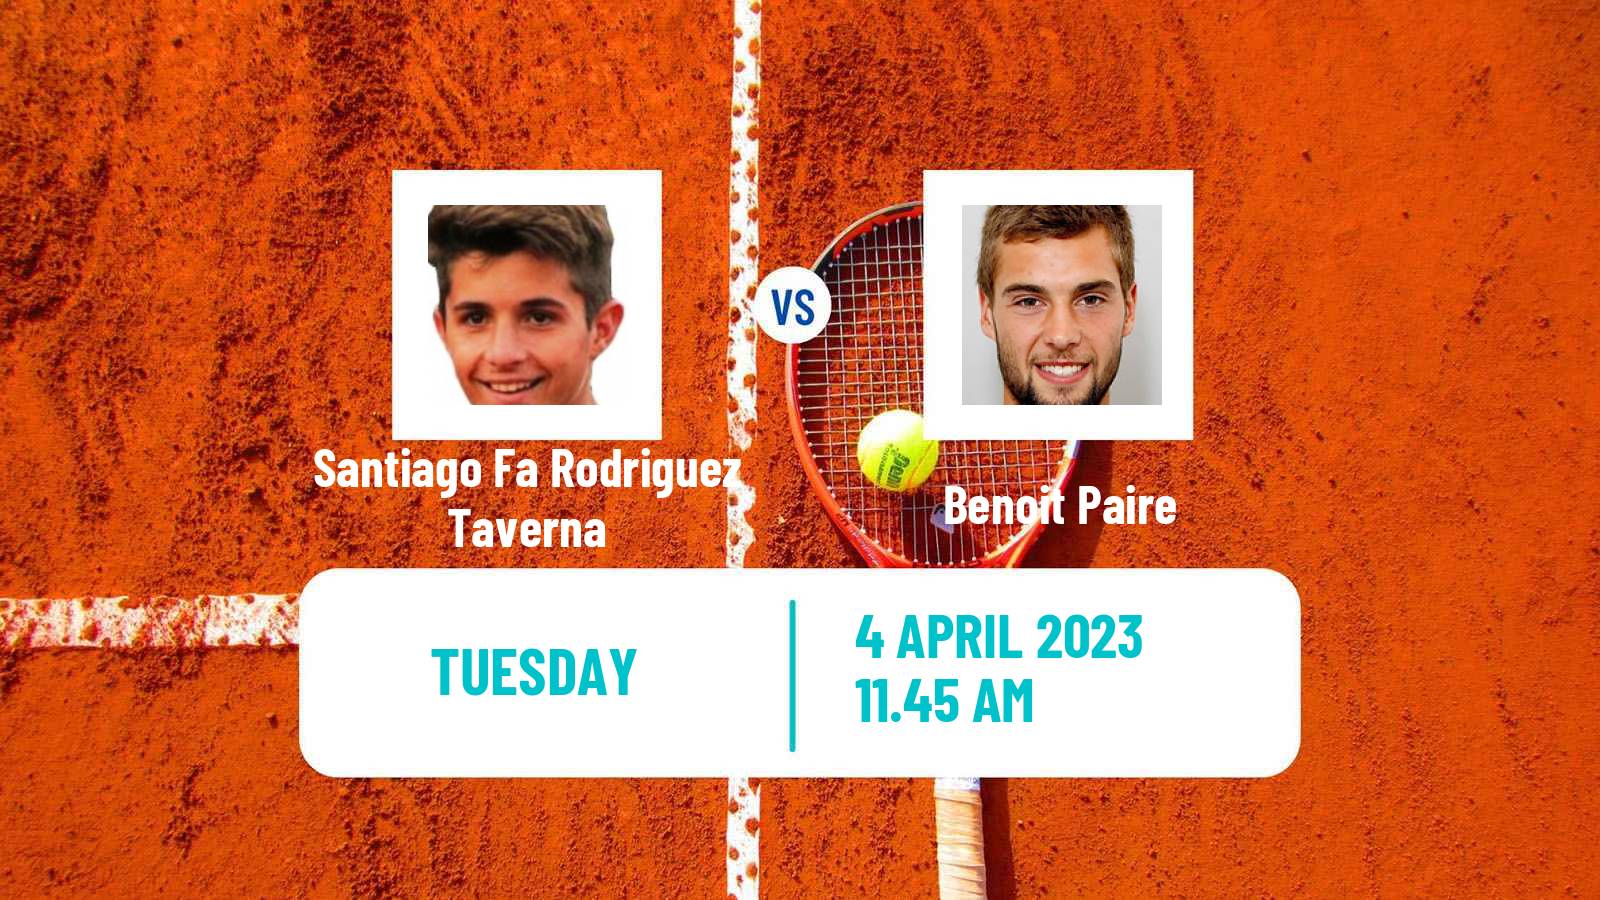 Tennis ATP Challenger Santiago Fa Rodriguez Taverna - Benoit Paire